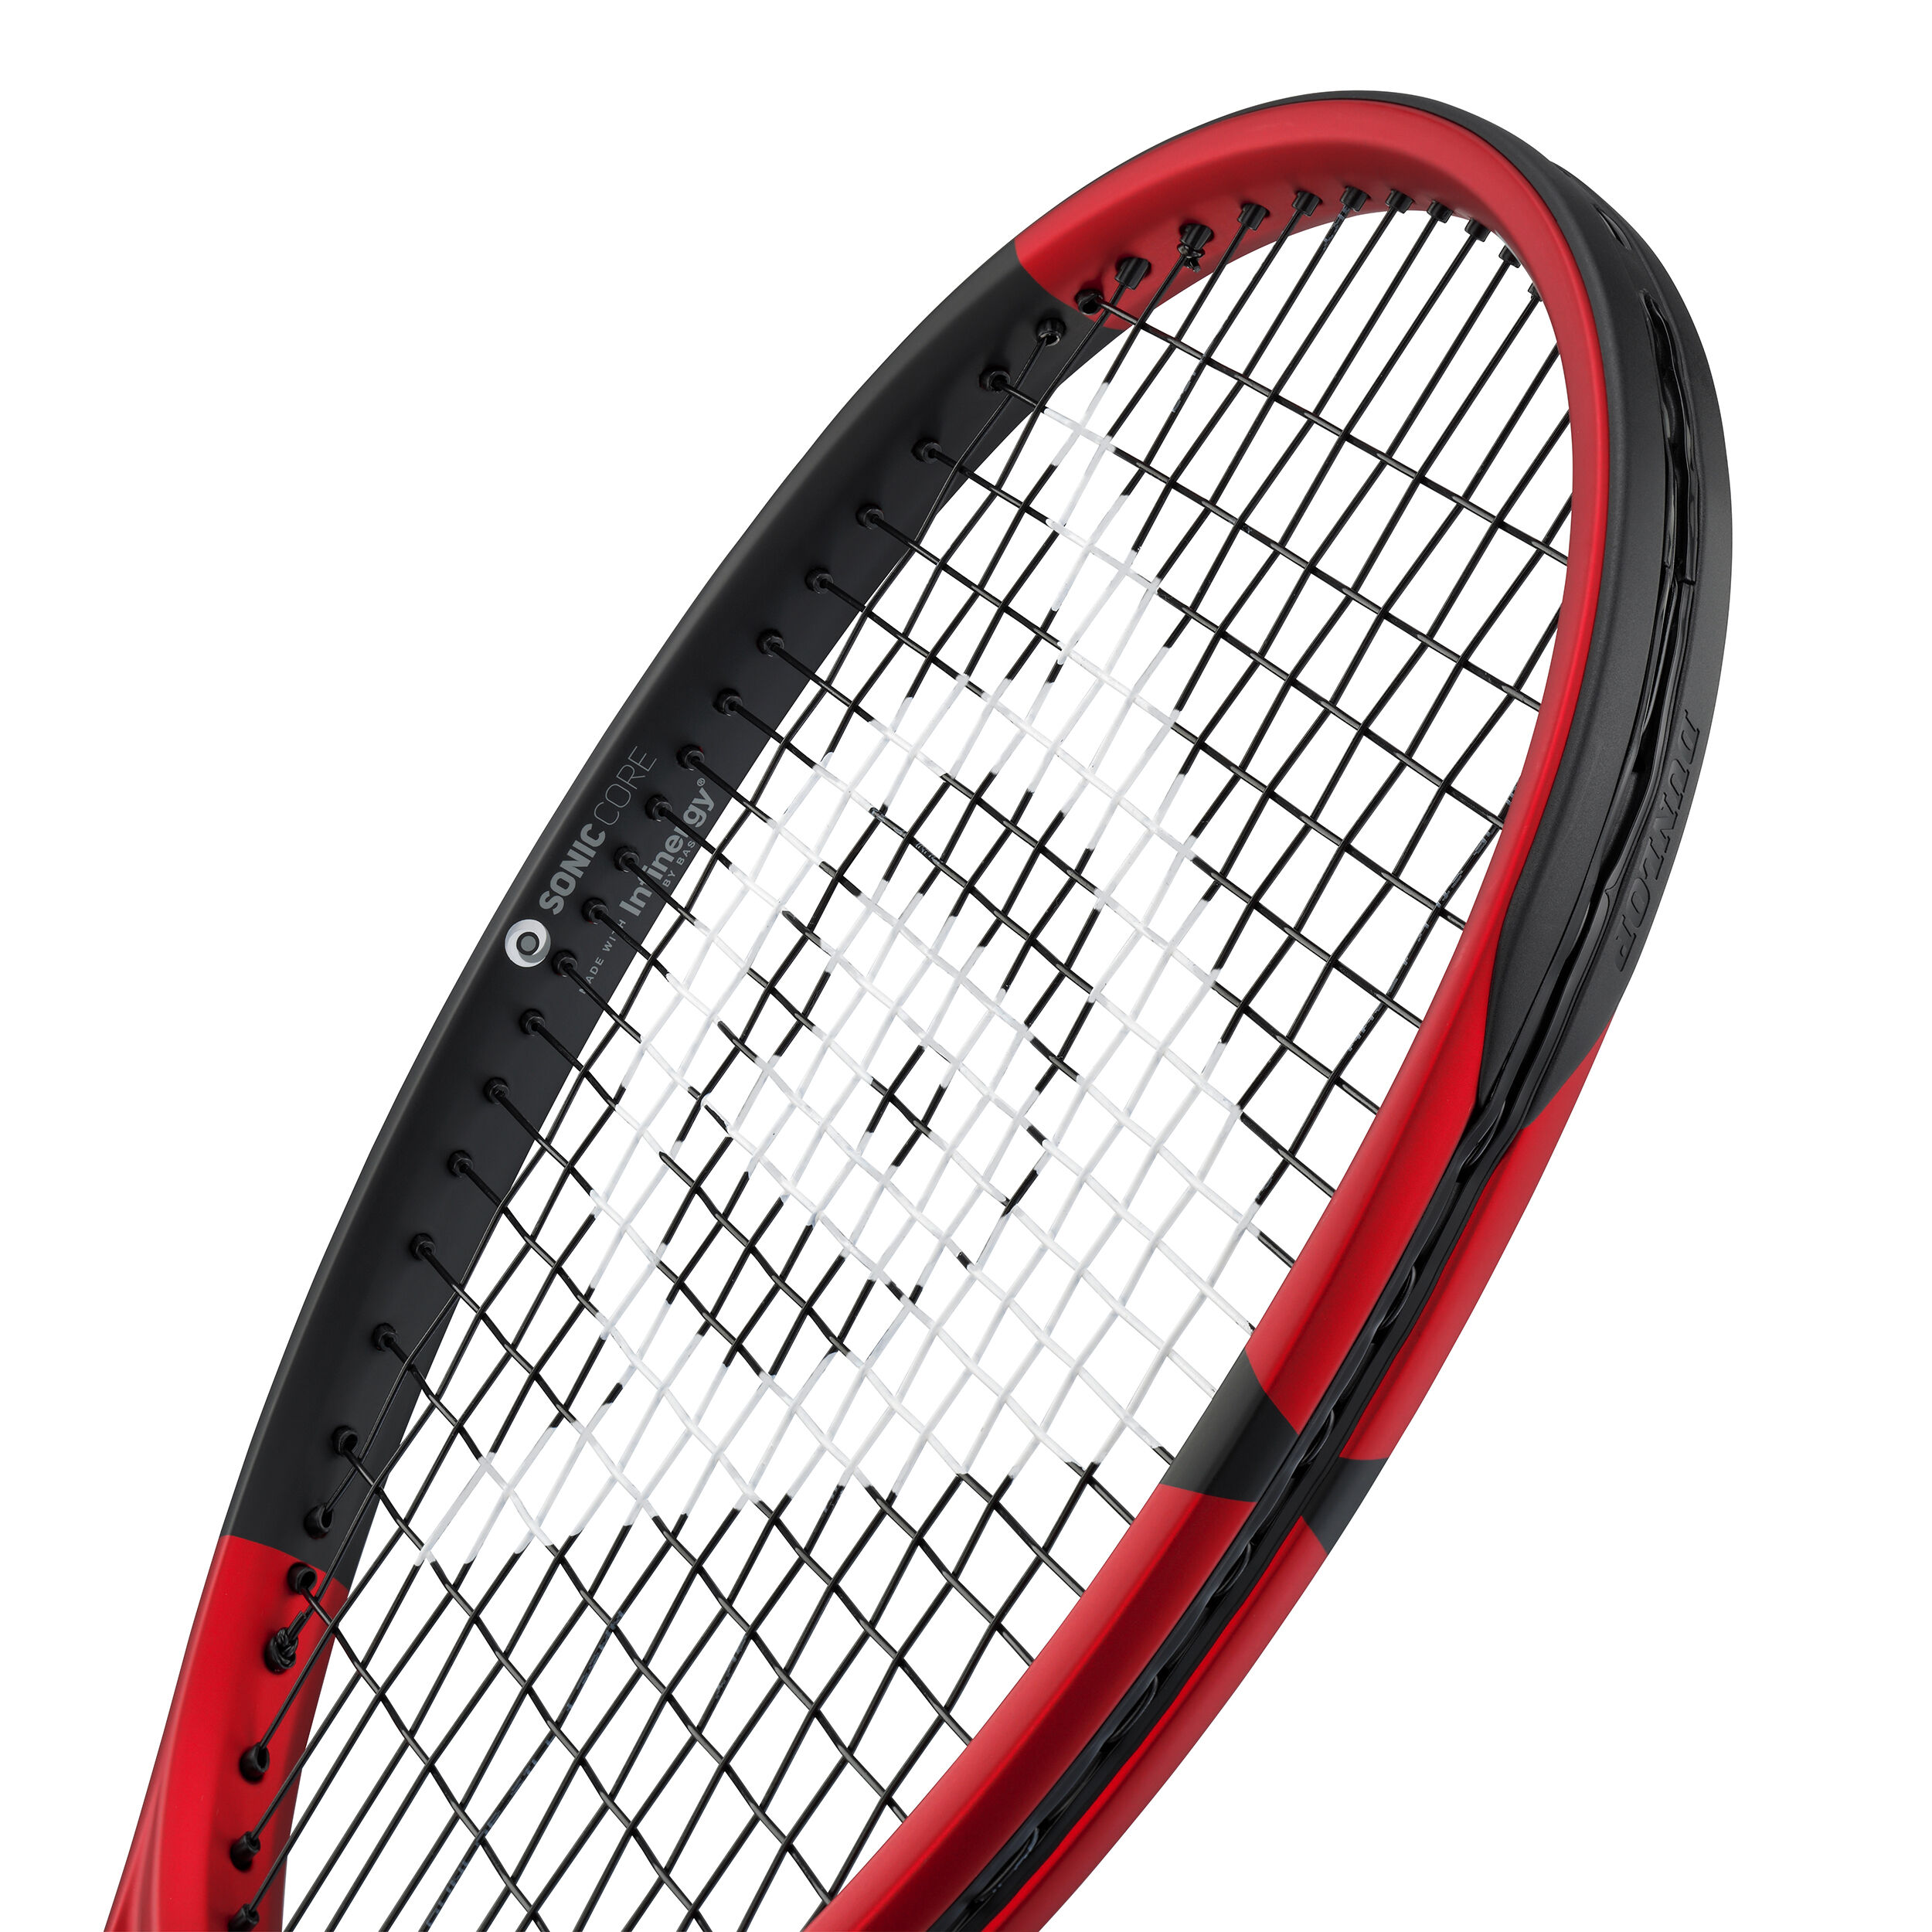 Buy Dunlop CX 400 online | Tennis Point COM